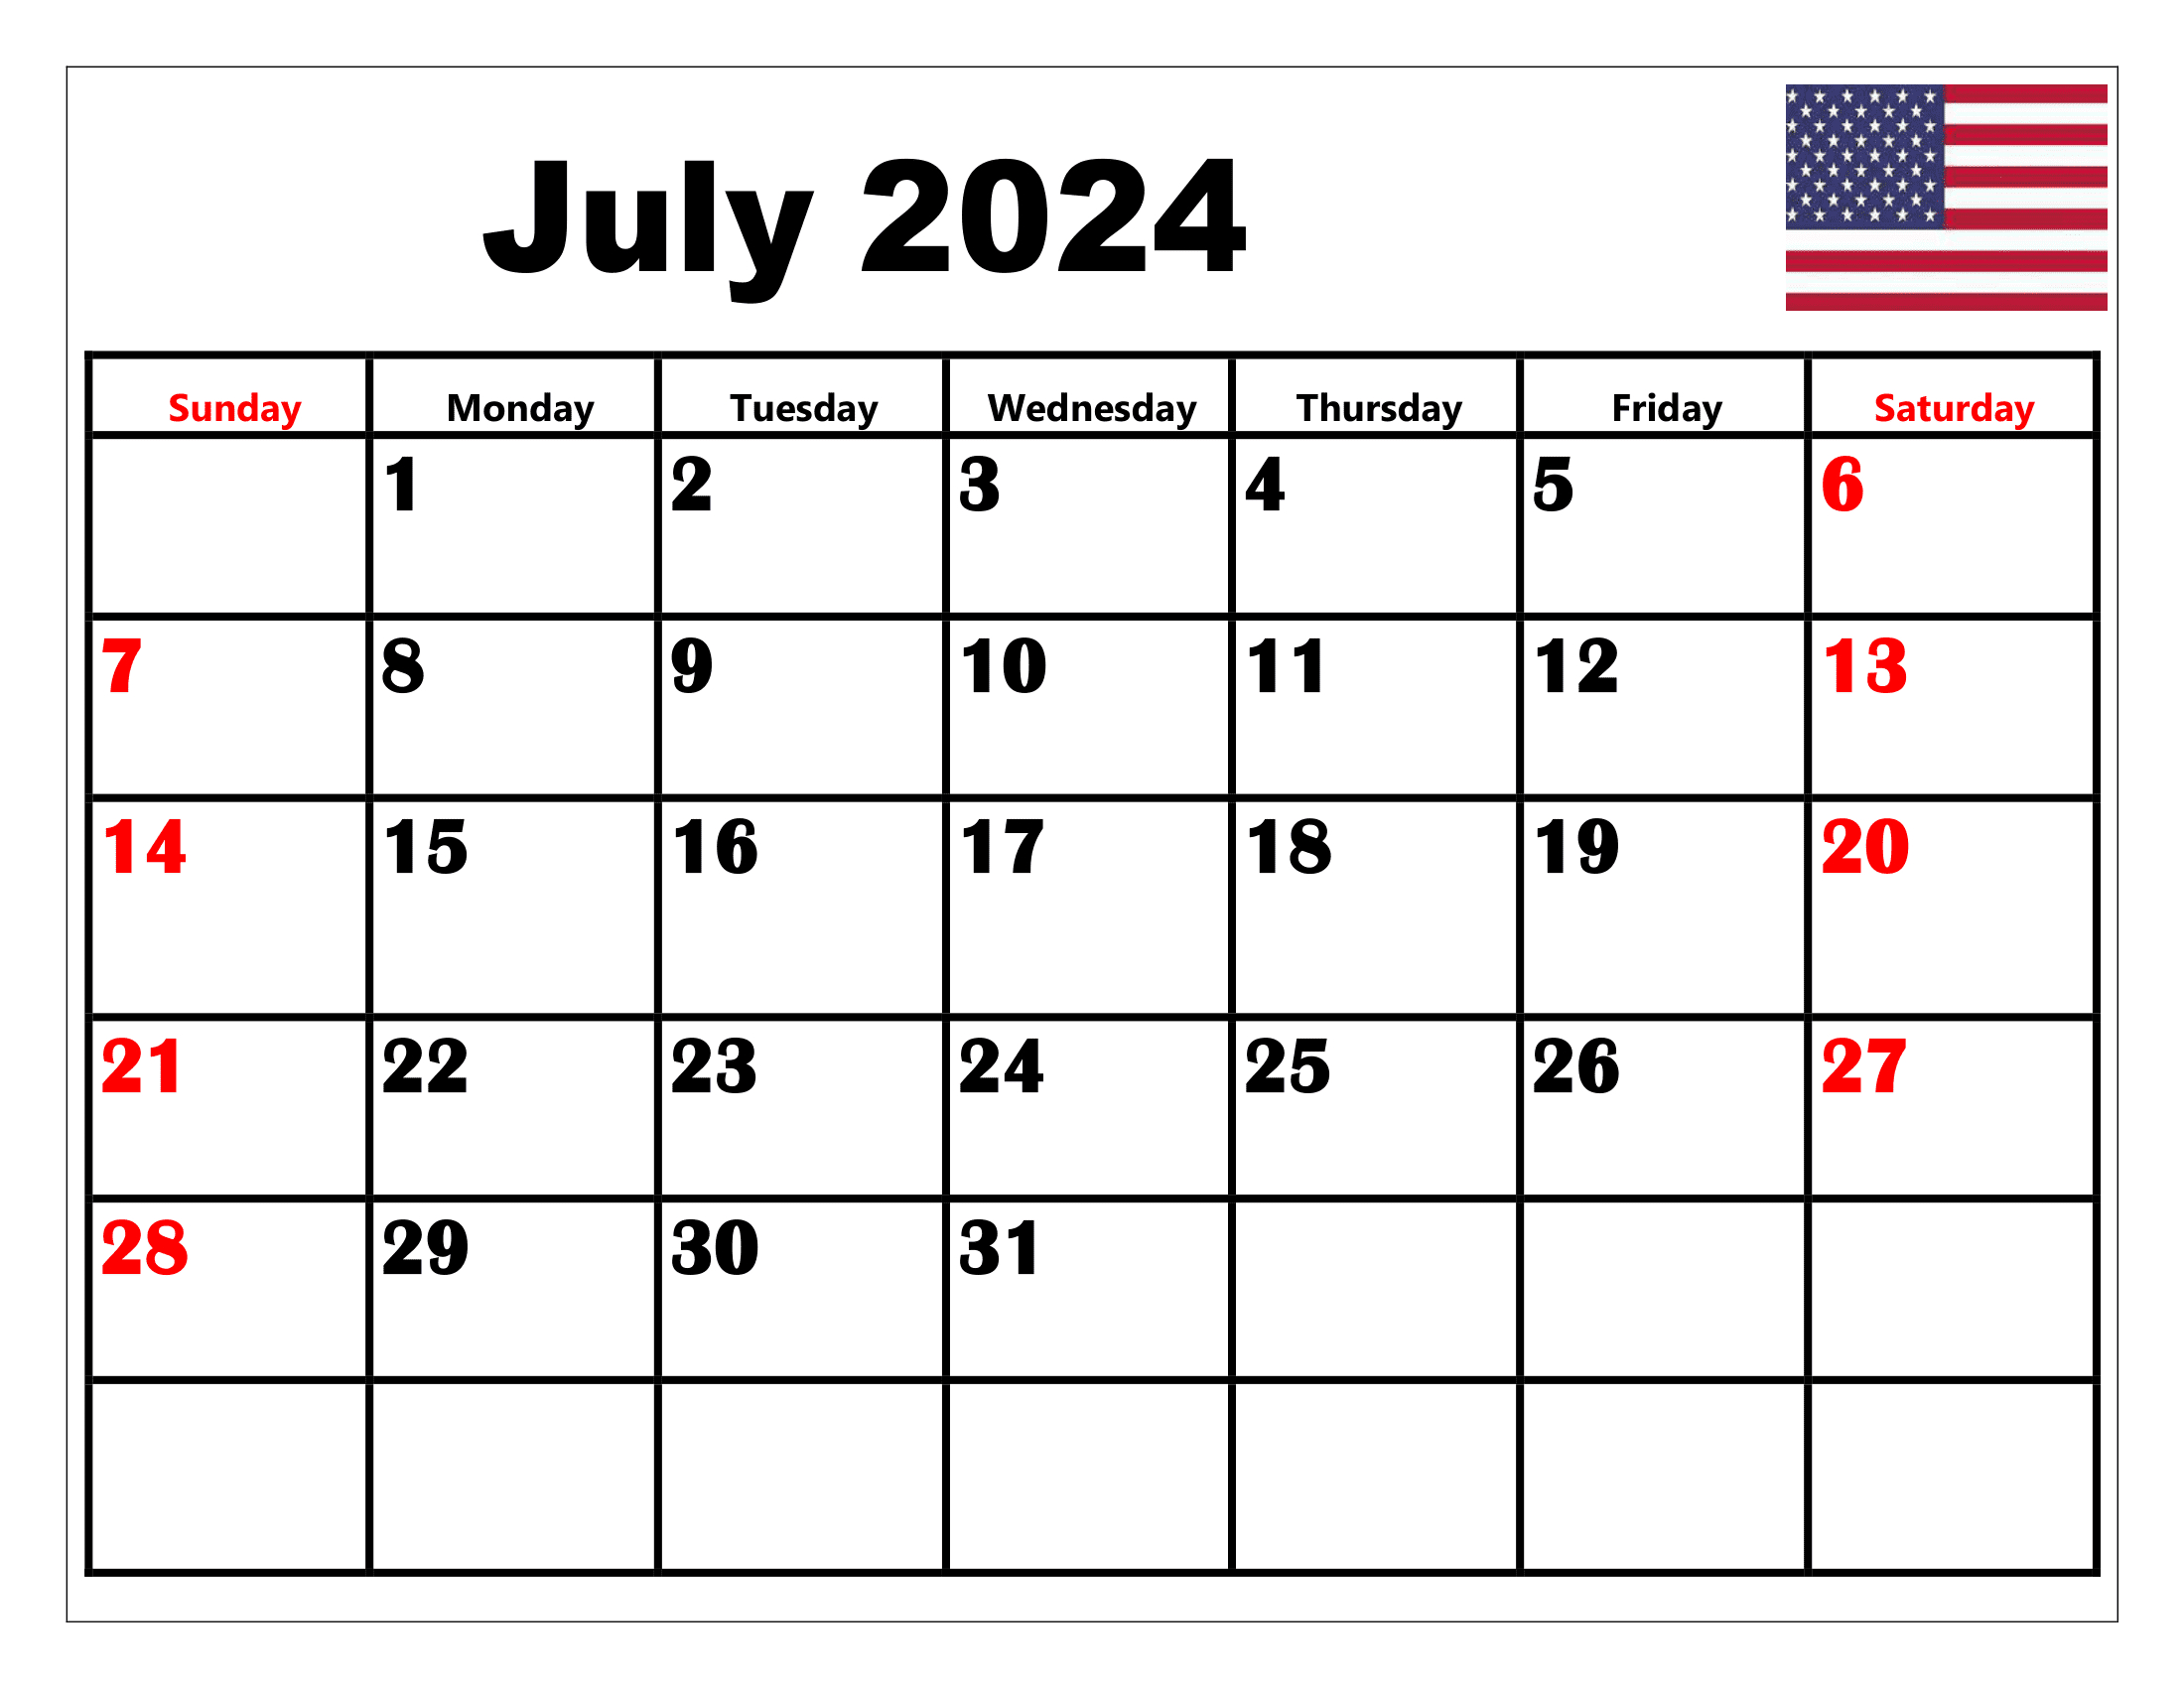 July 2024 Calendar With Holidays - Calendar.rjuuc.edu.np regarding July 2024 Holiday Calendar